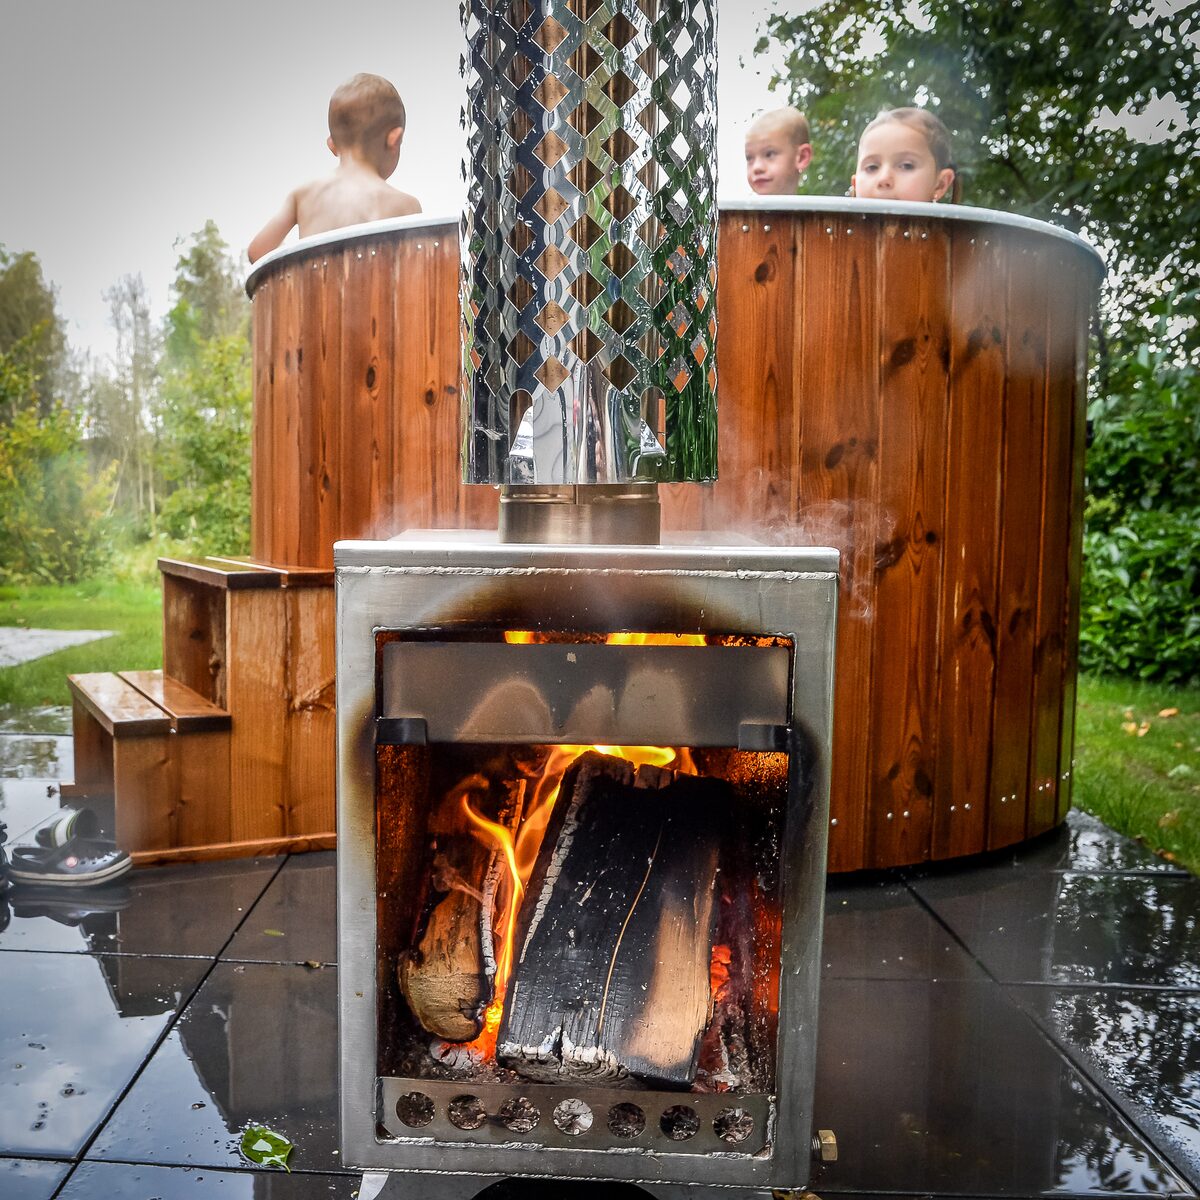 Reggehooiberg with sauna and hot tub | 5 people